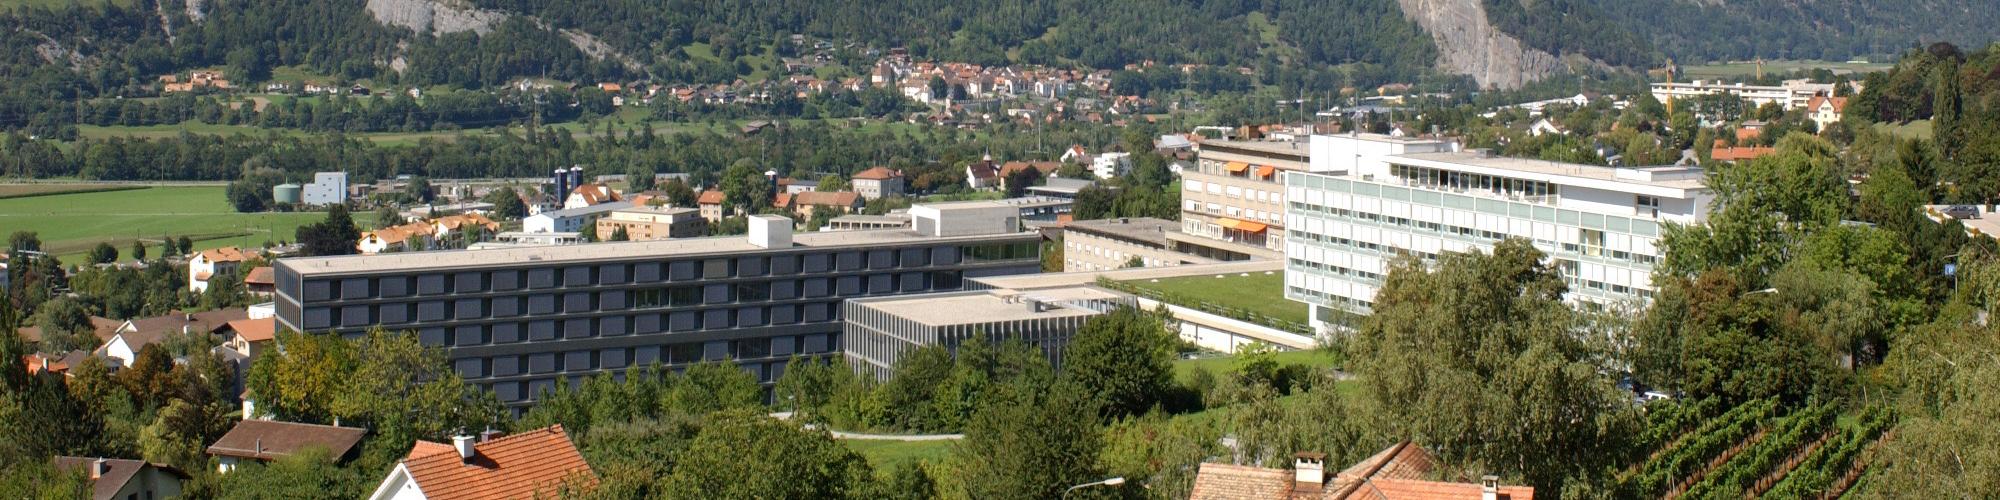 Kantonsspital Graubünden